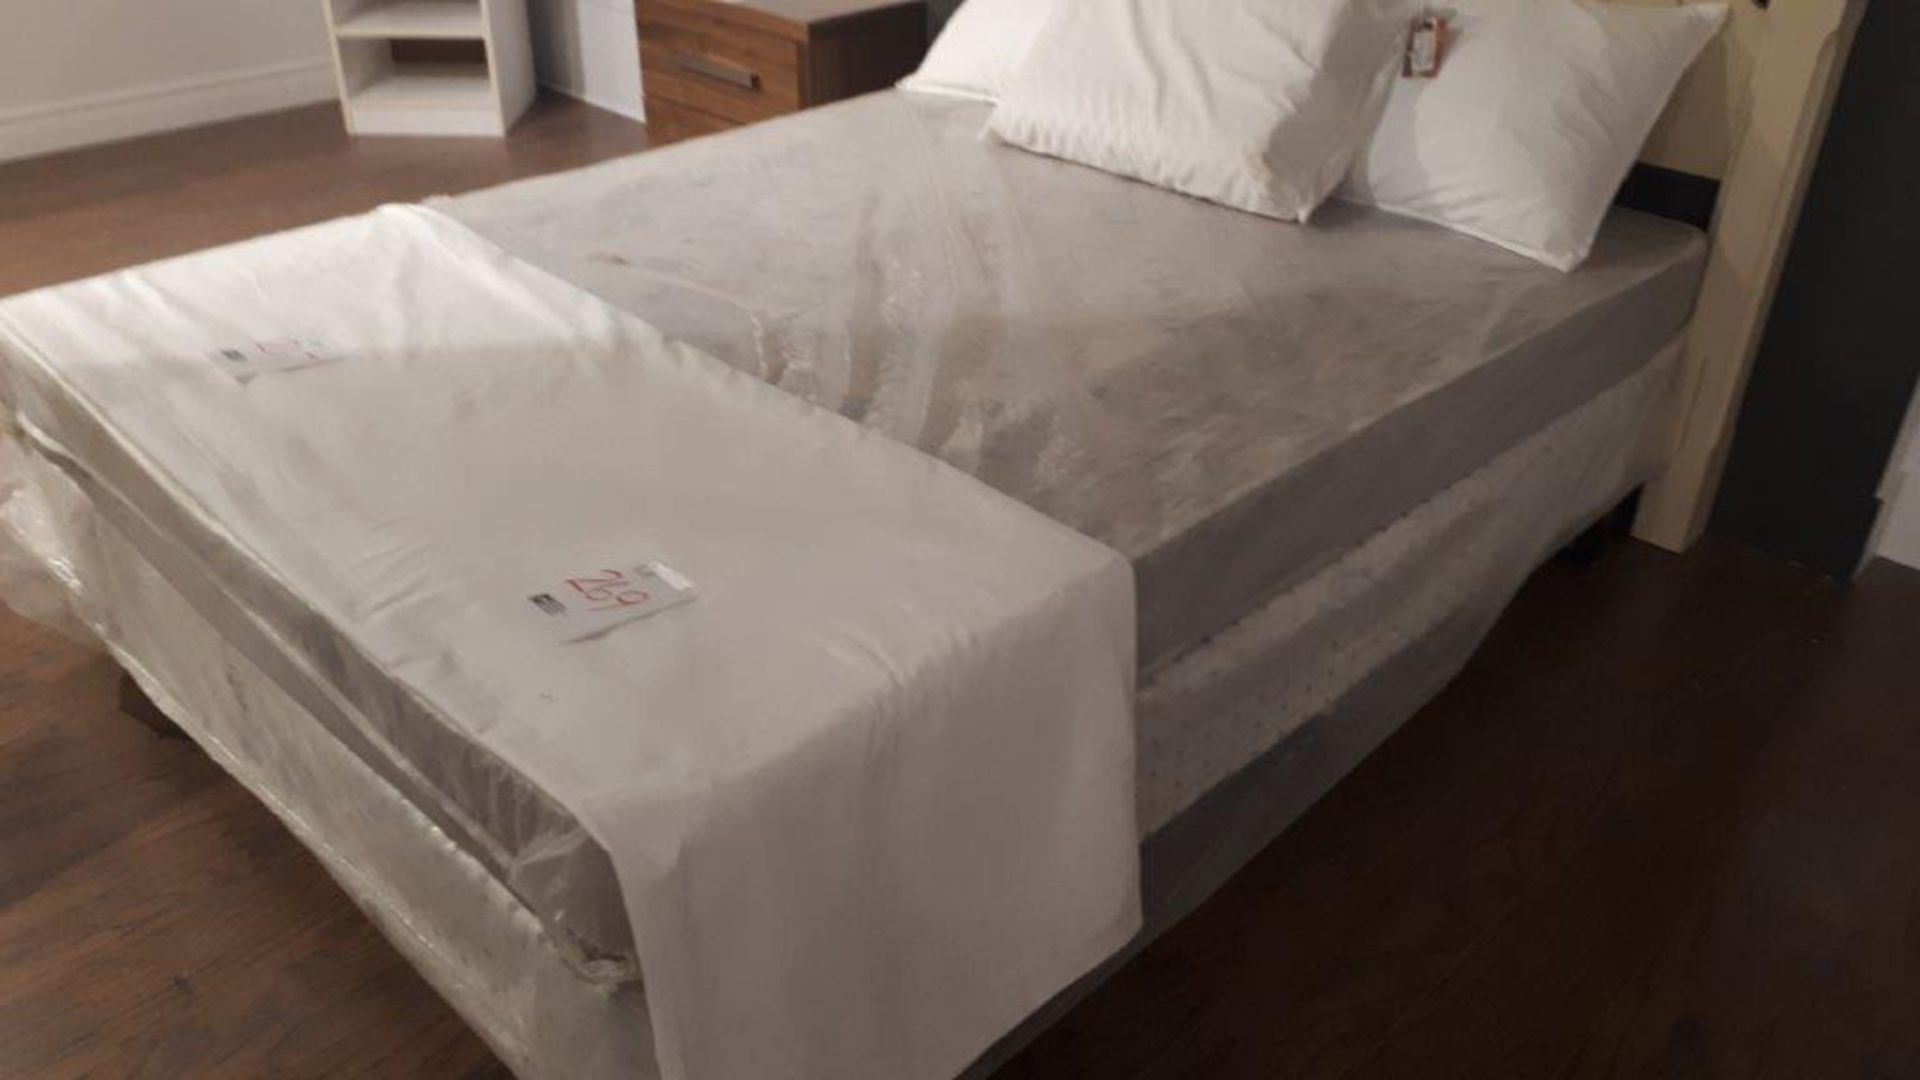 Queen size mattress w/low profile box & frame